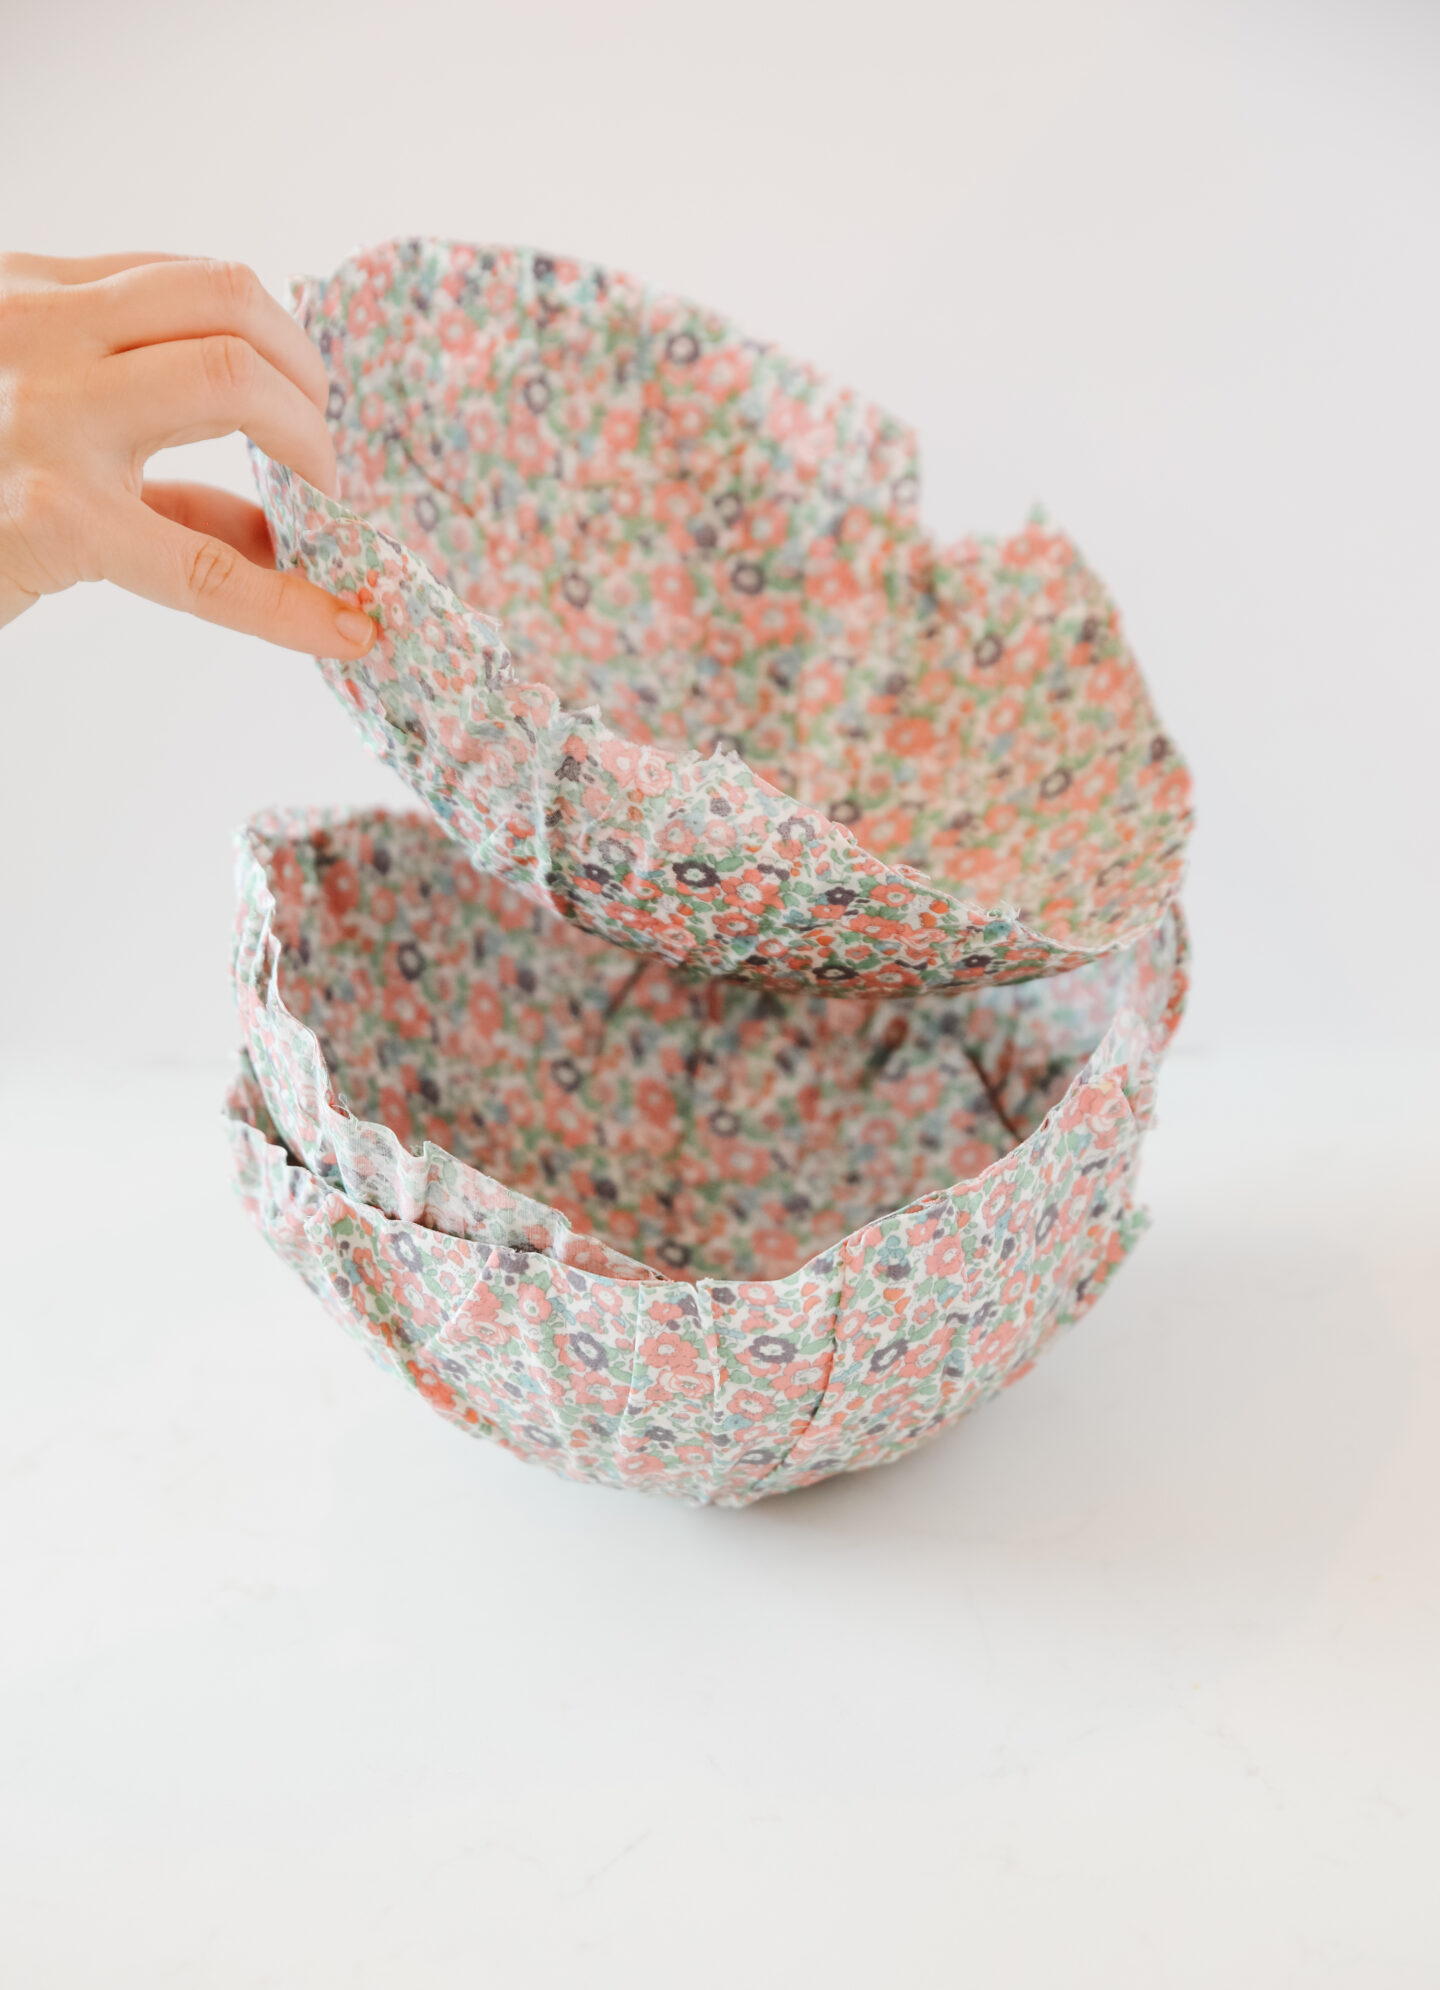 DIY papier mache fabric bowls